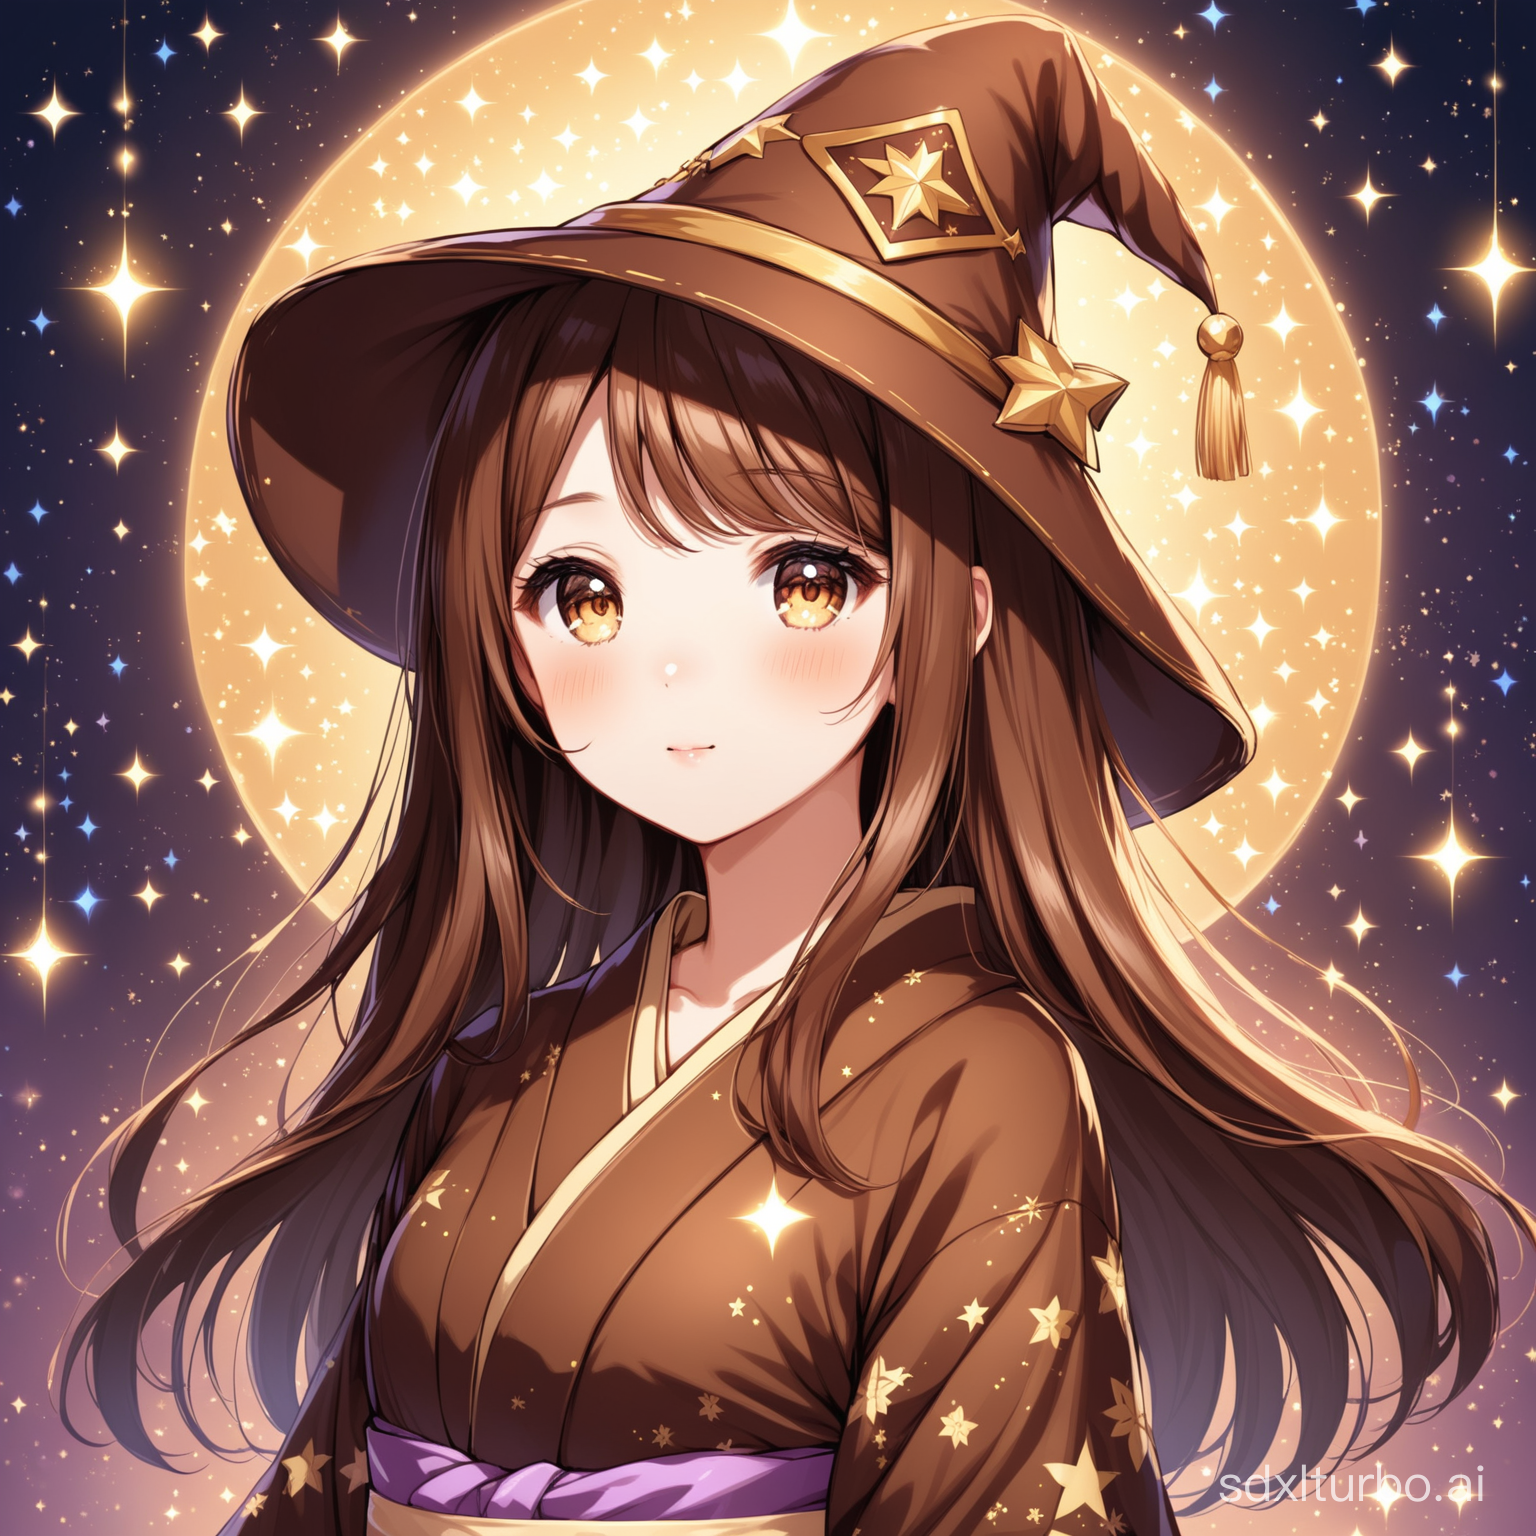 Beautiful girl with brown hair wearing a brown magic hat and kimono 